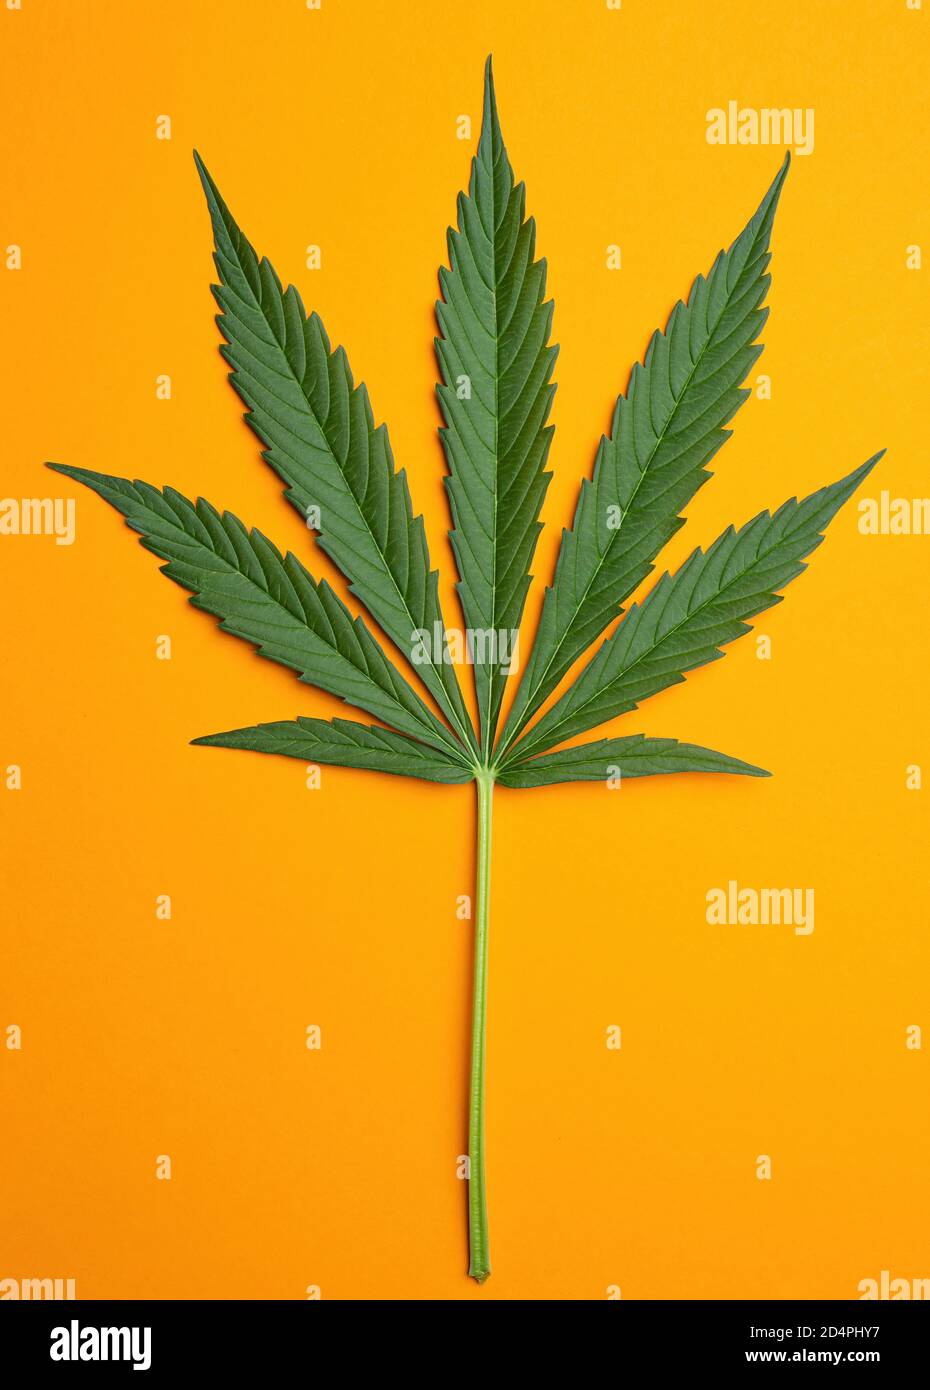 Fresh Green Leaf of full-grown Hemp - Cannabis - on orange background. Growing medical marijuana. Studio shot. Stock Photo